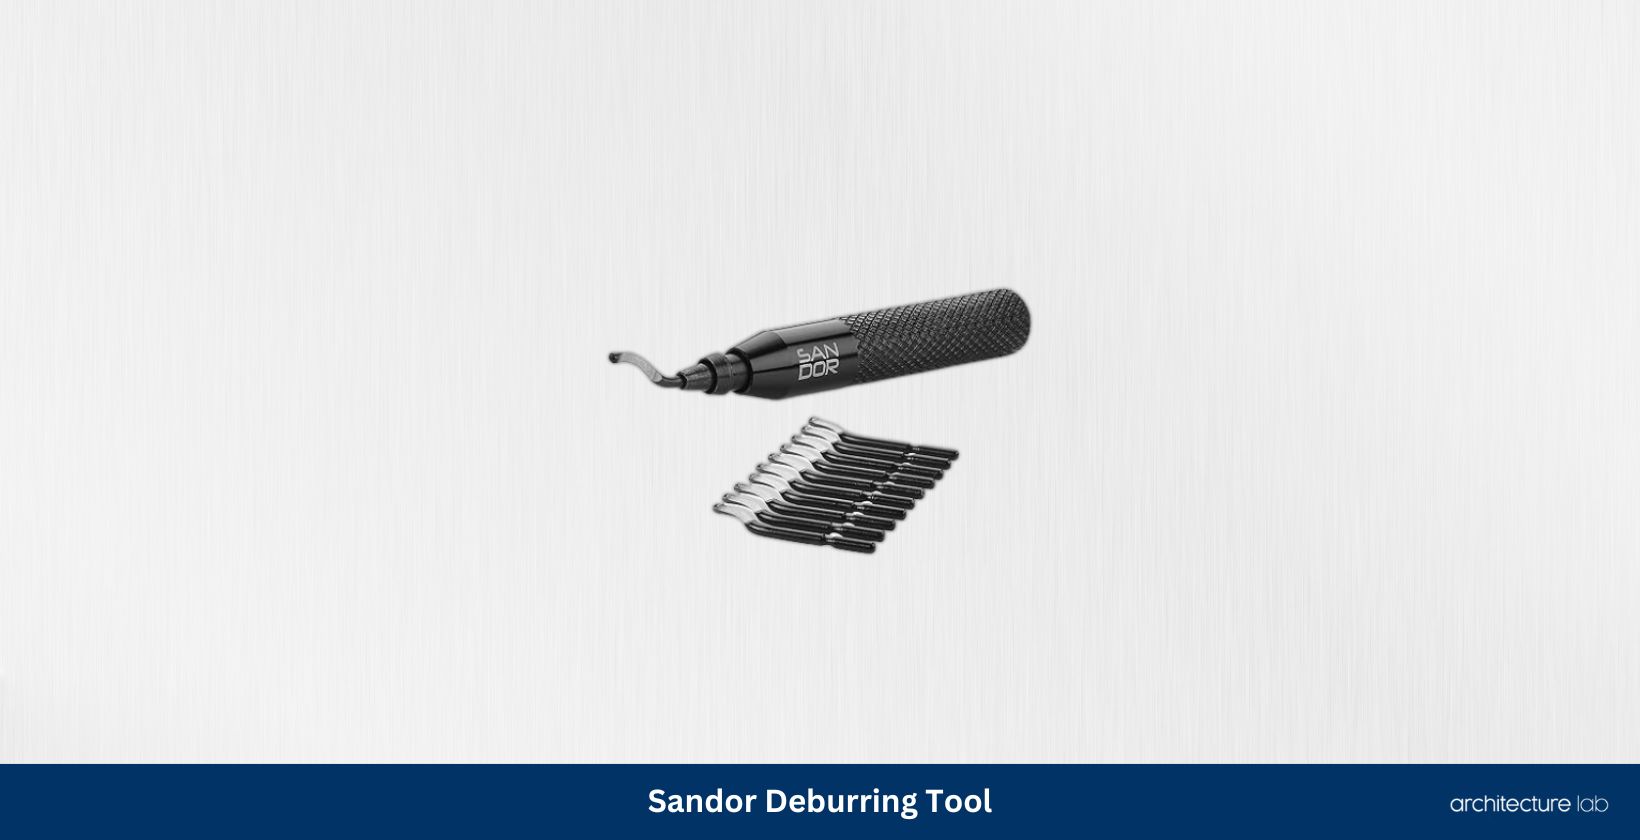 Sandor deburring tool sr019